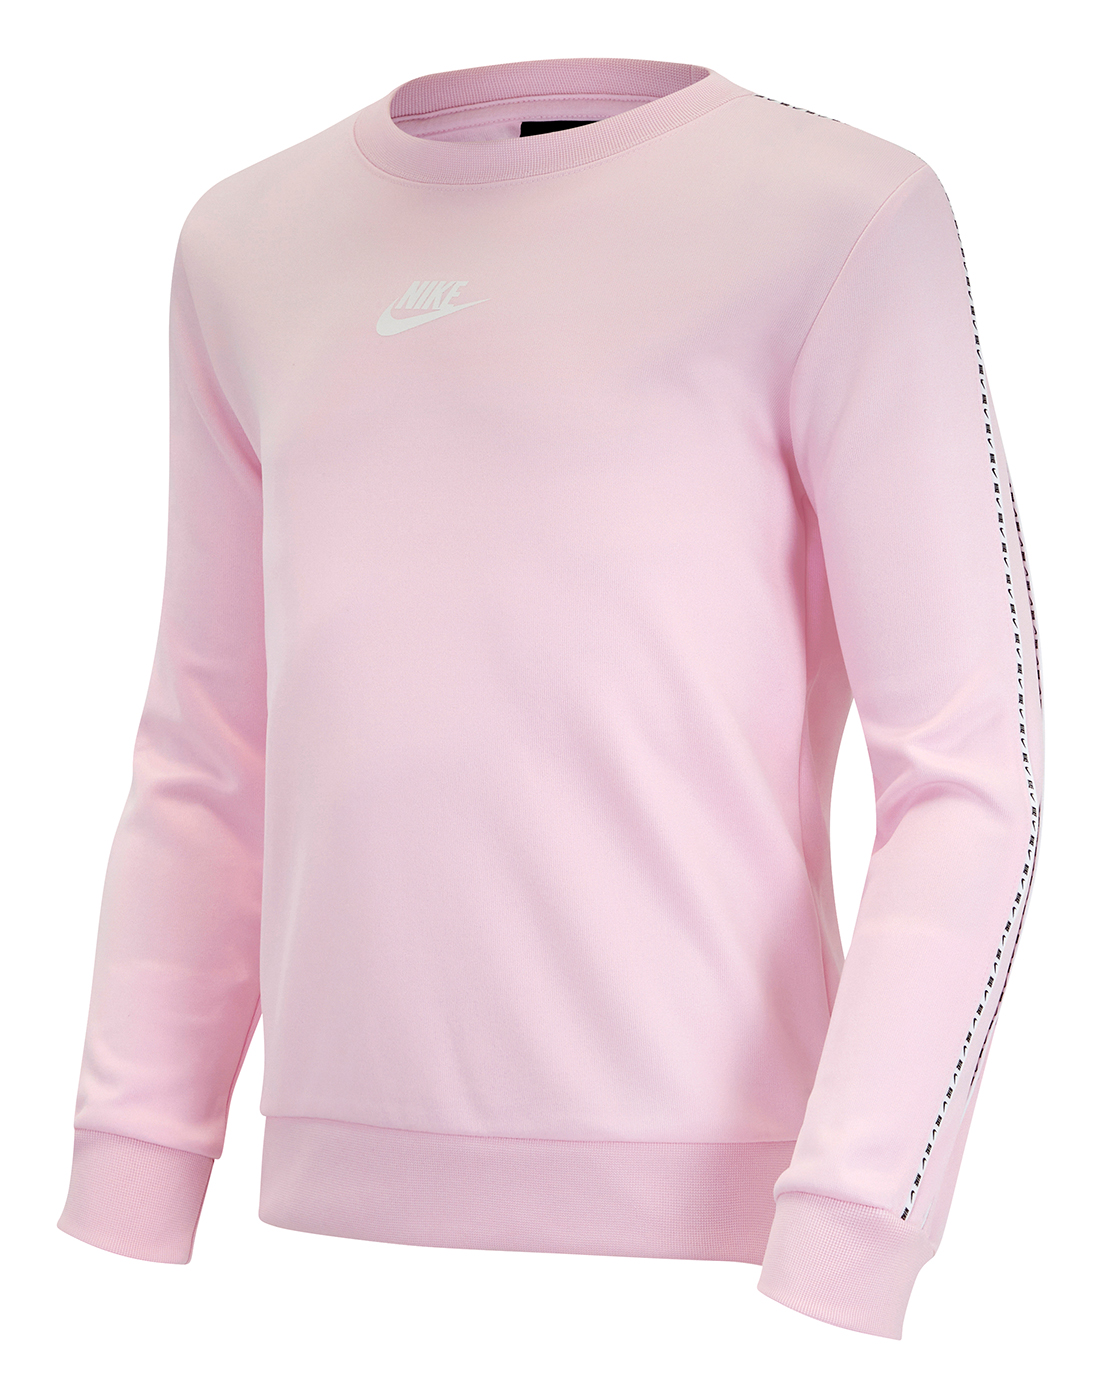 Nike Older Boys Repeat Crew Neck Sweatshirt - Pink | Life Style Sports UK